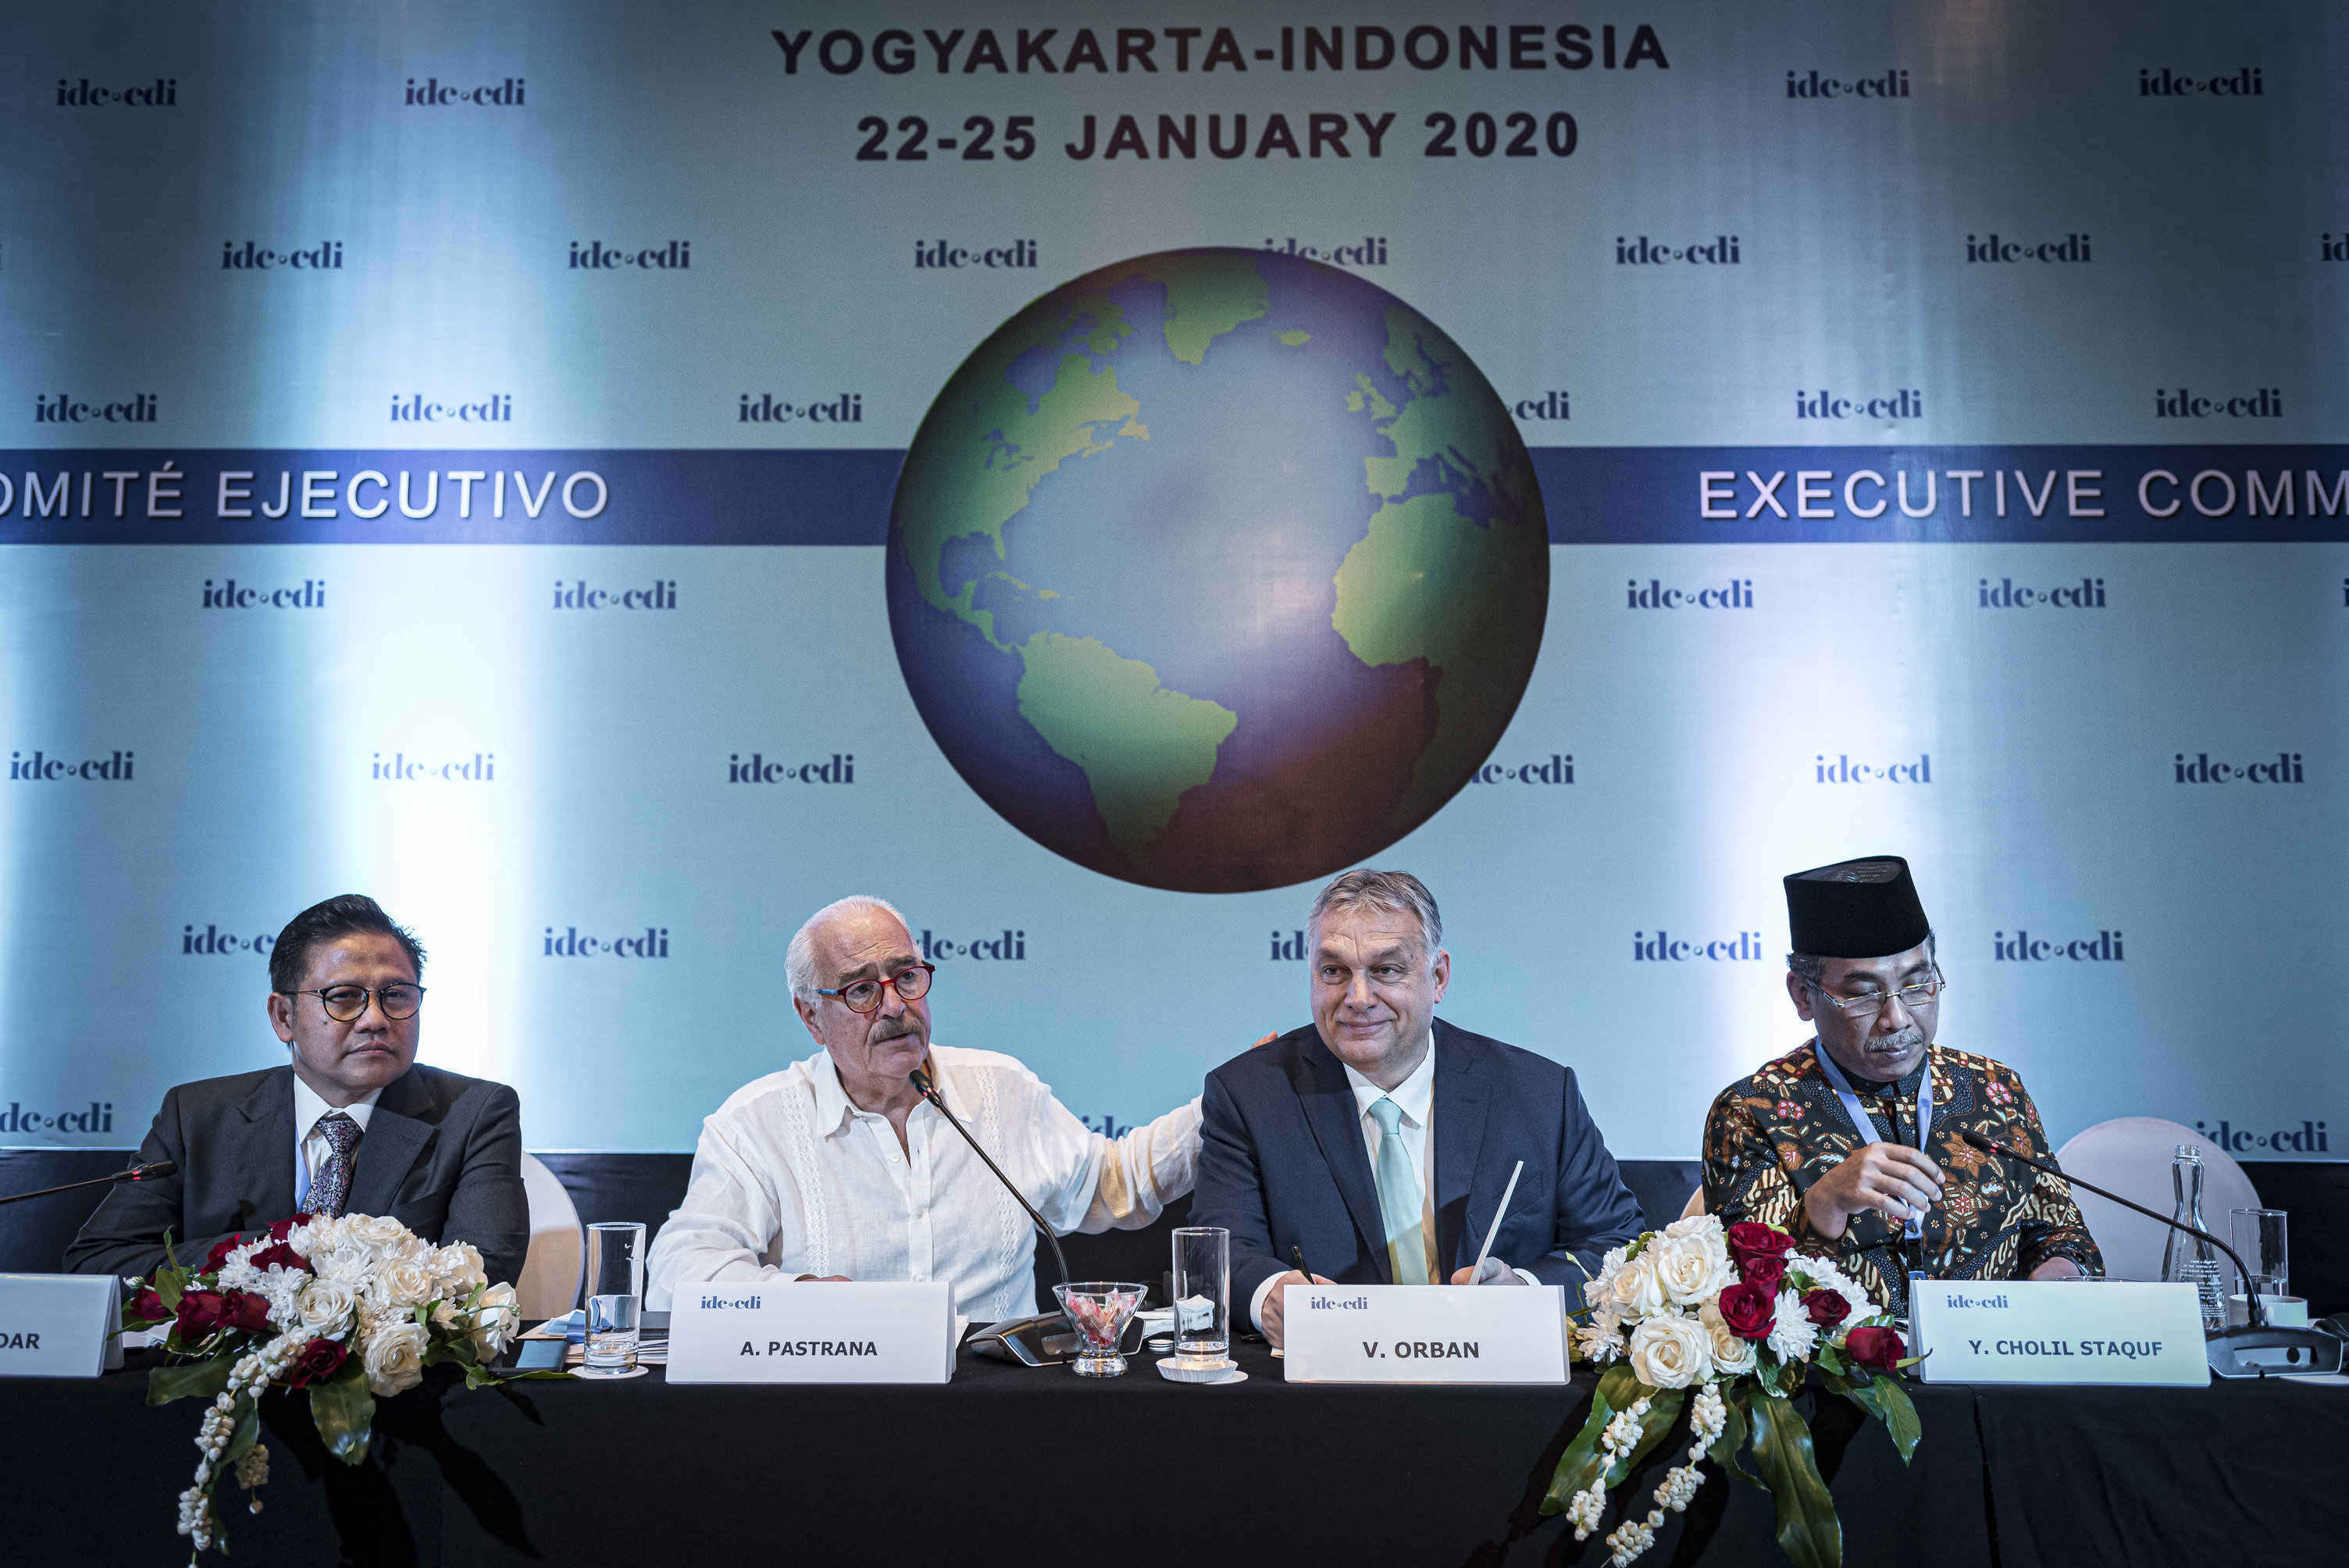 hungary indonesia trade deal